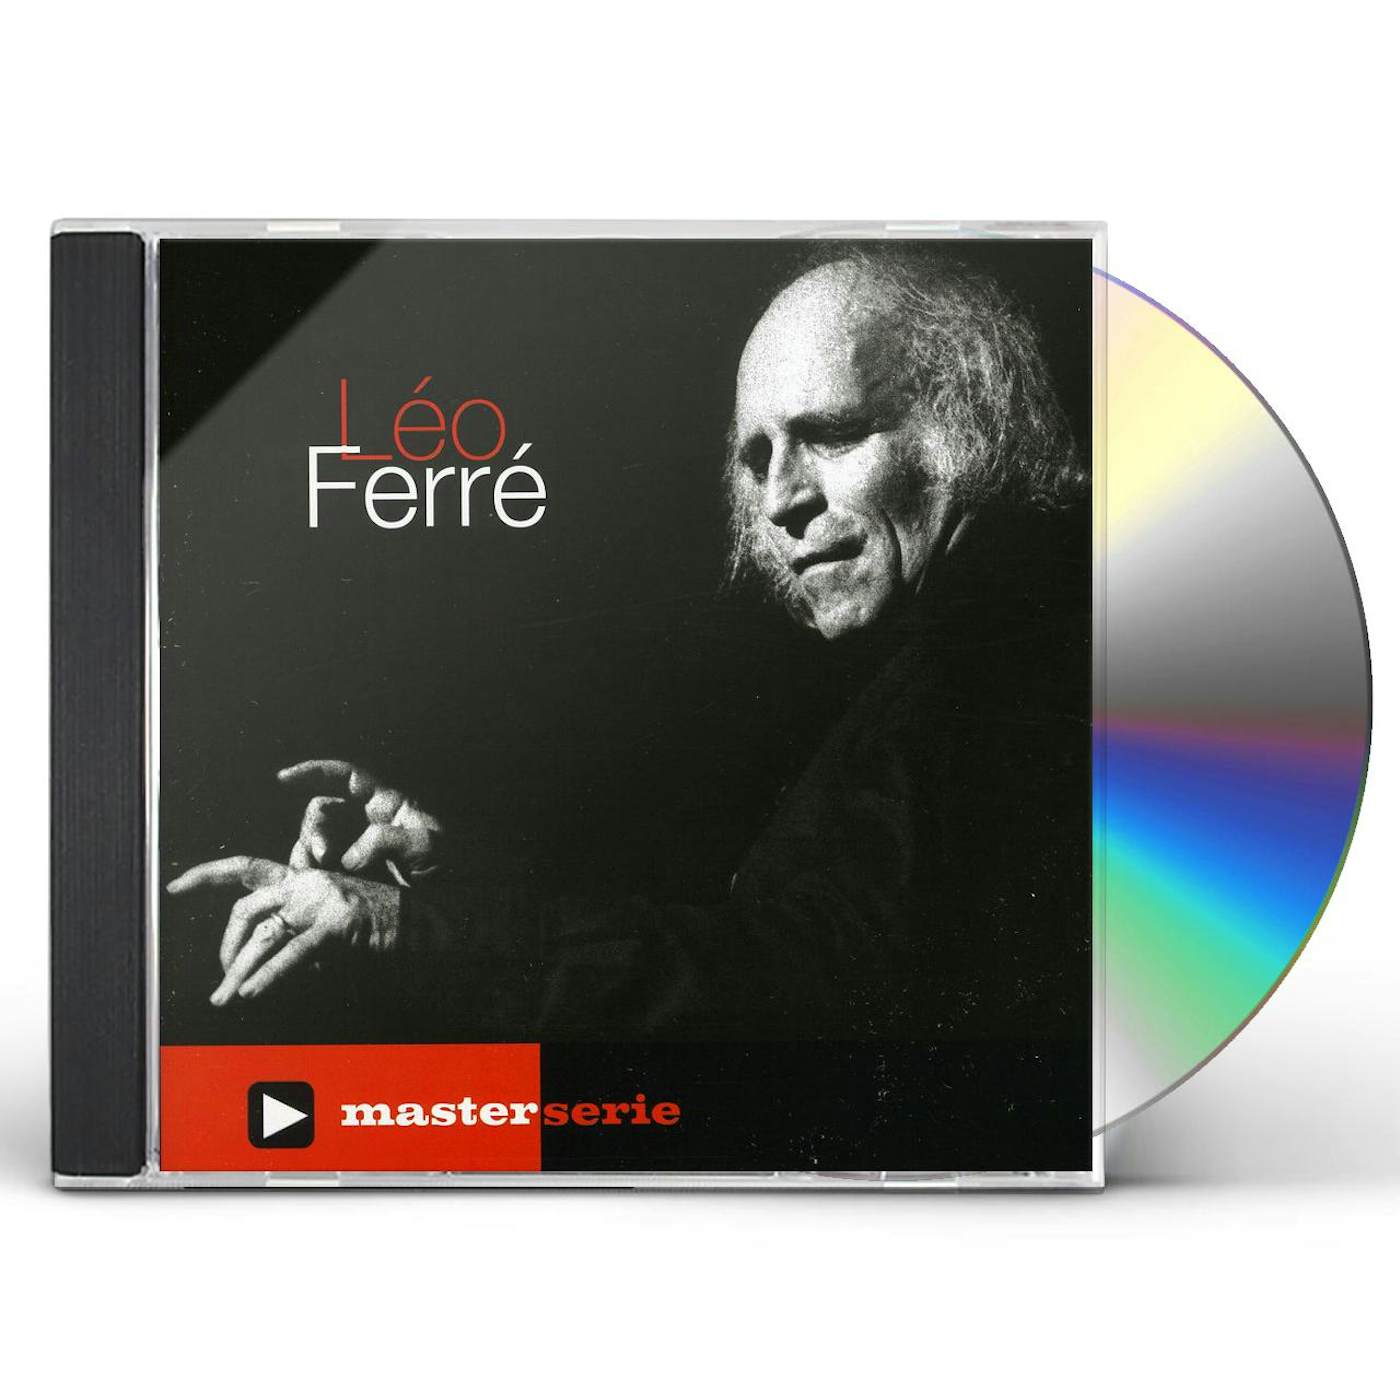 Léo Ferré MASTER SERIE CD